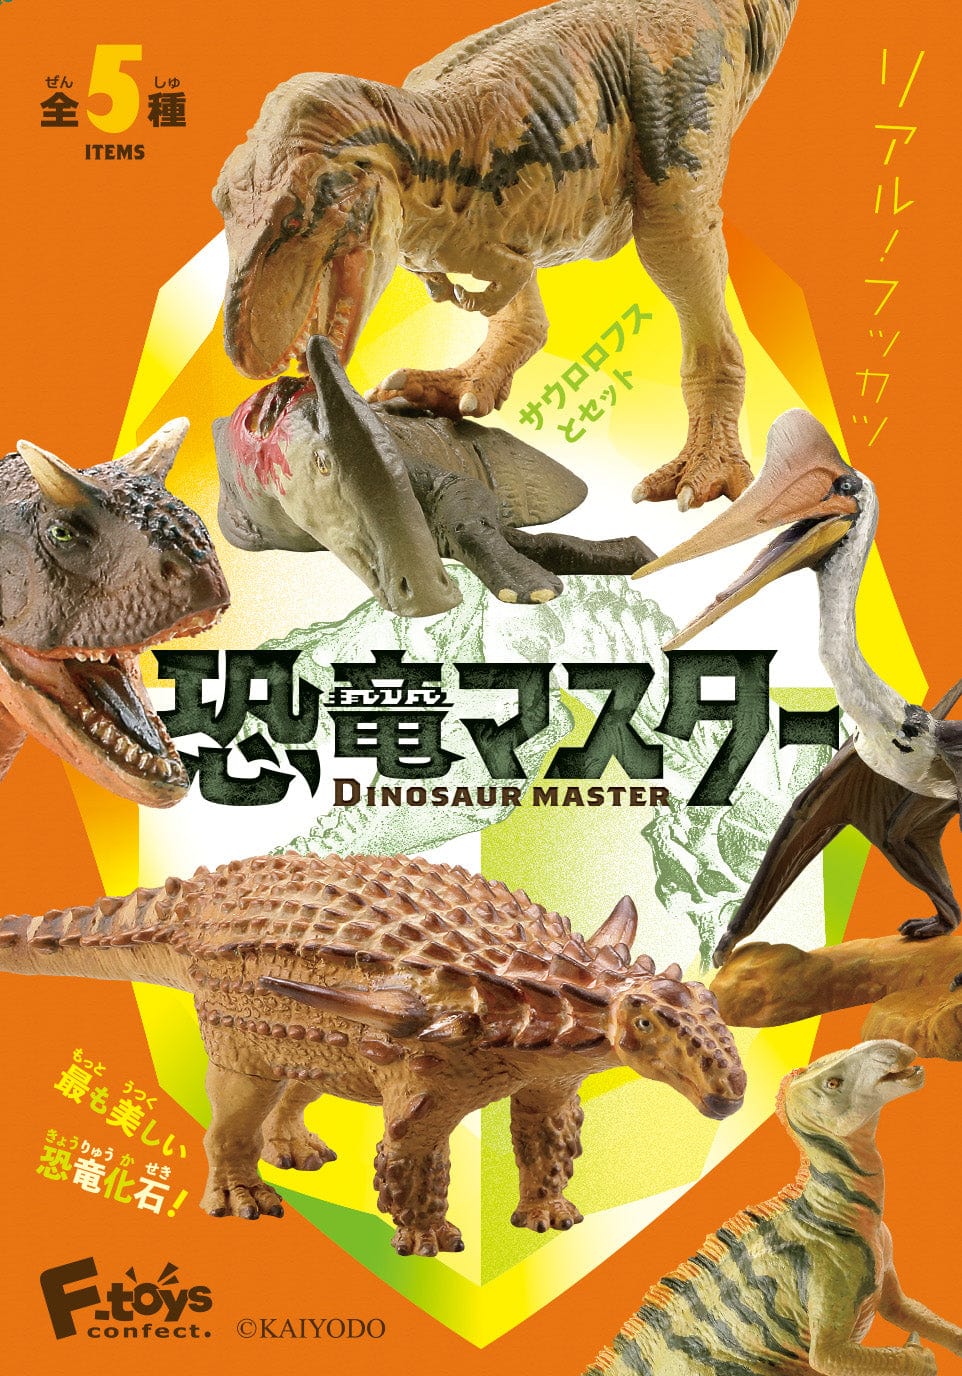 F-toys confect Dinosaur Master 2